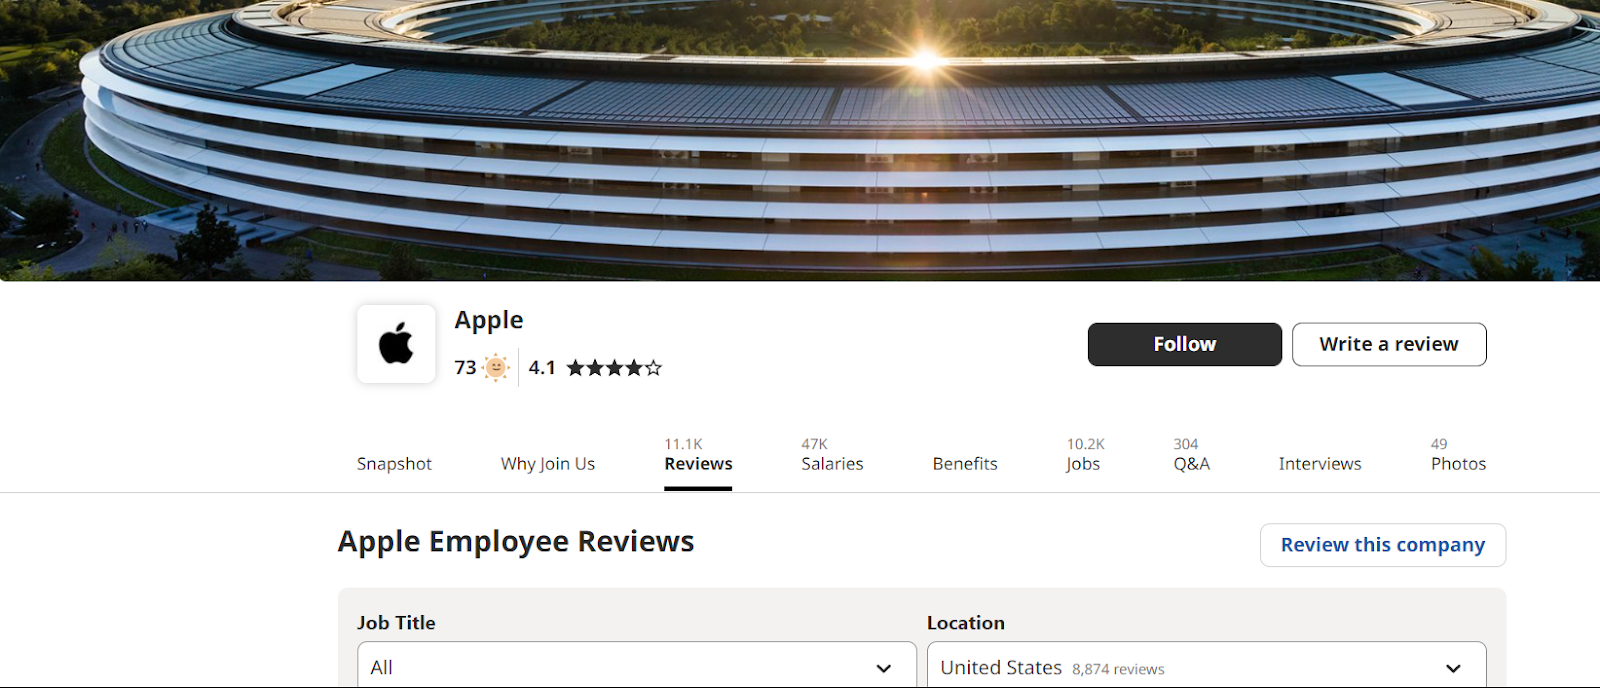 Apple's employee reviews are stellar